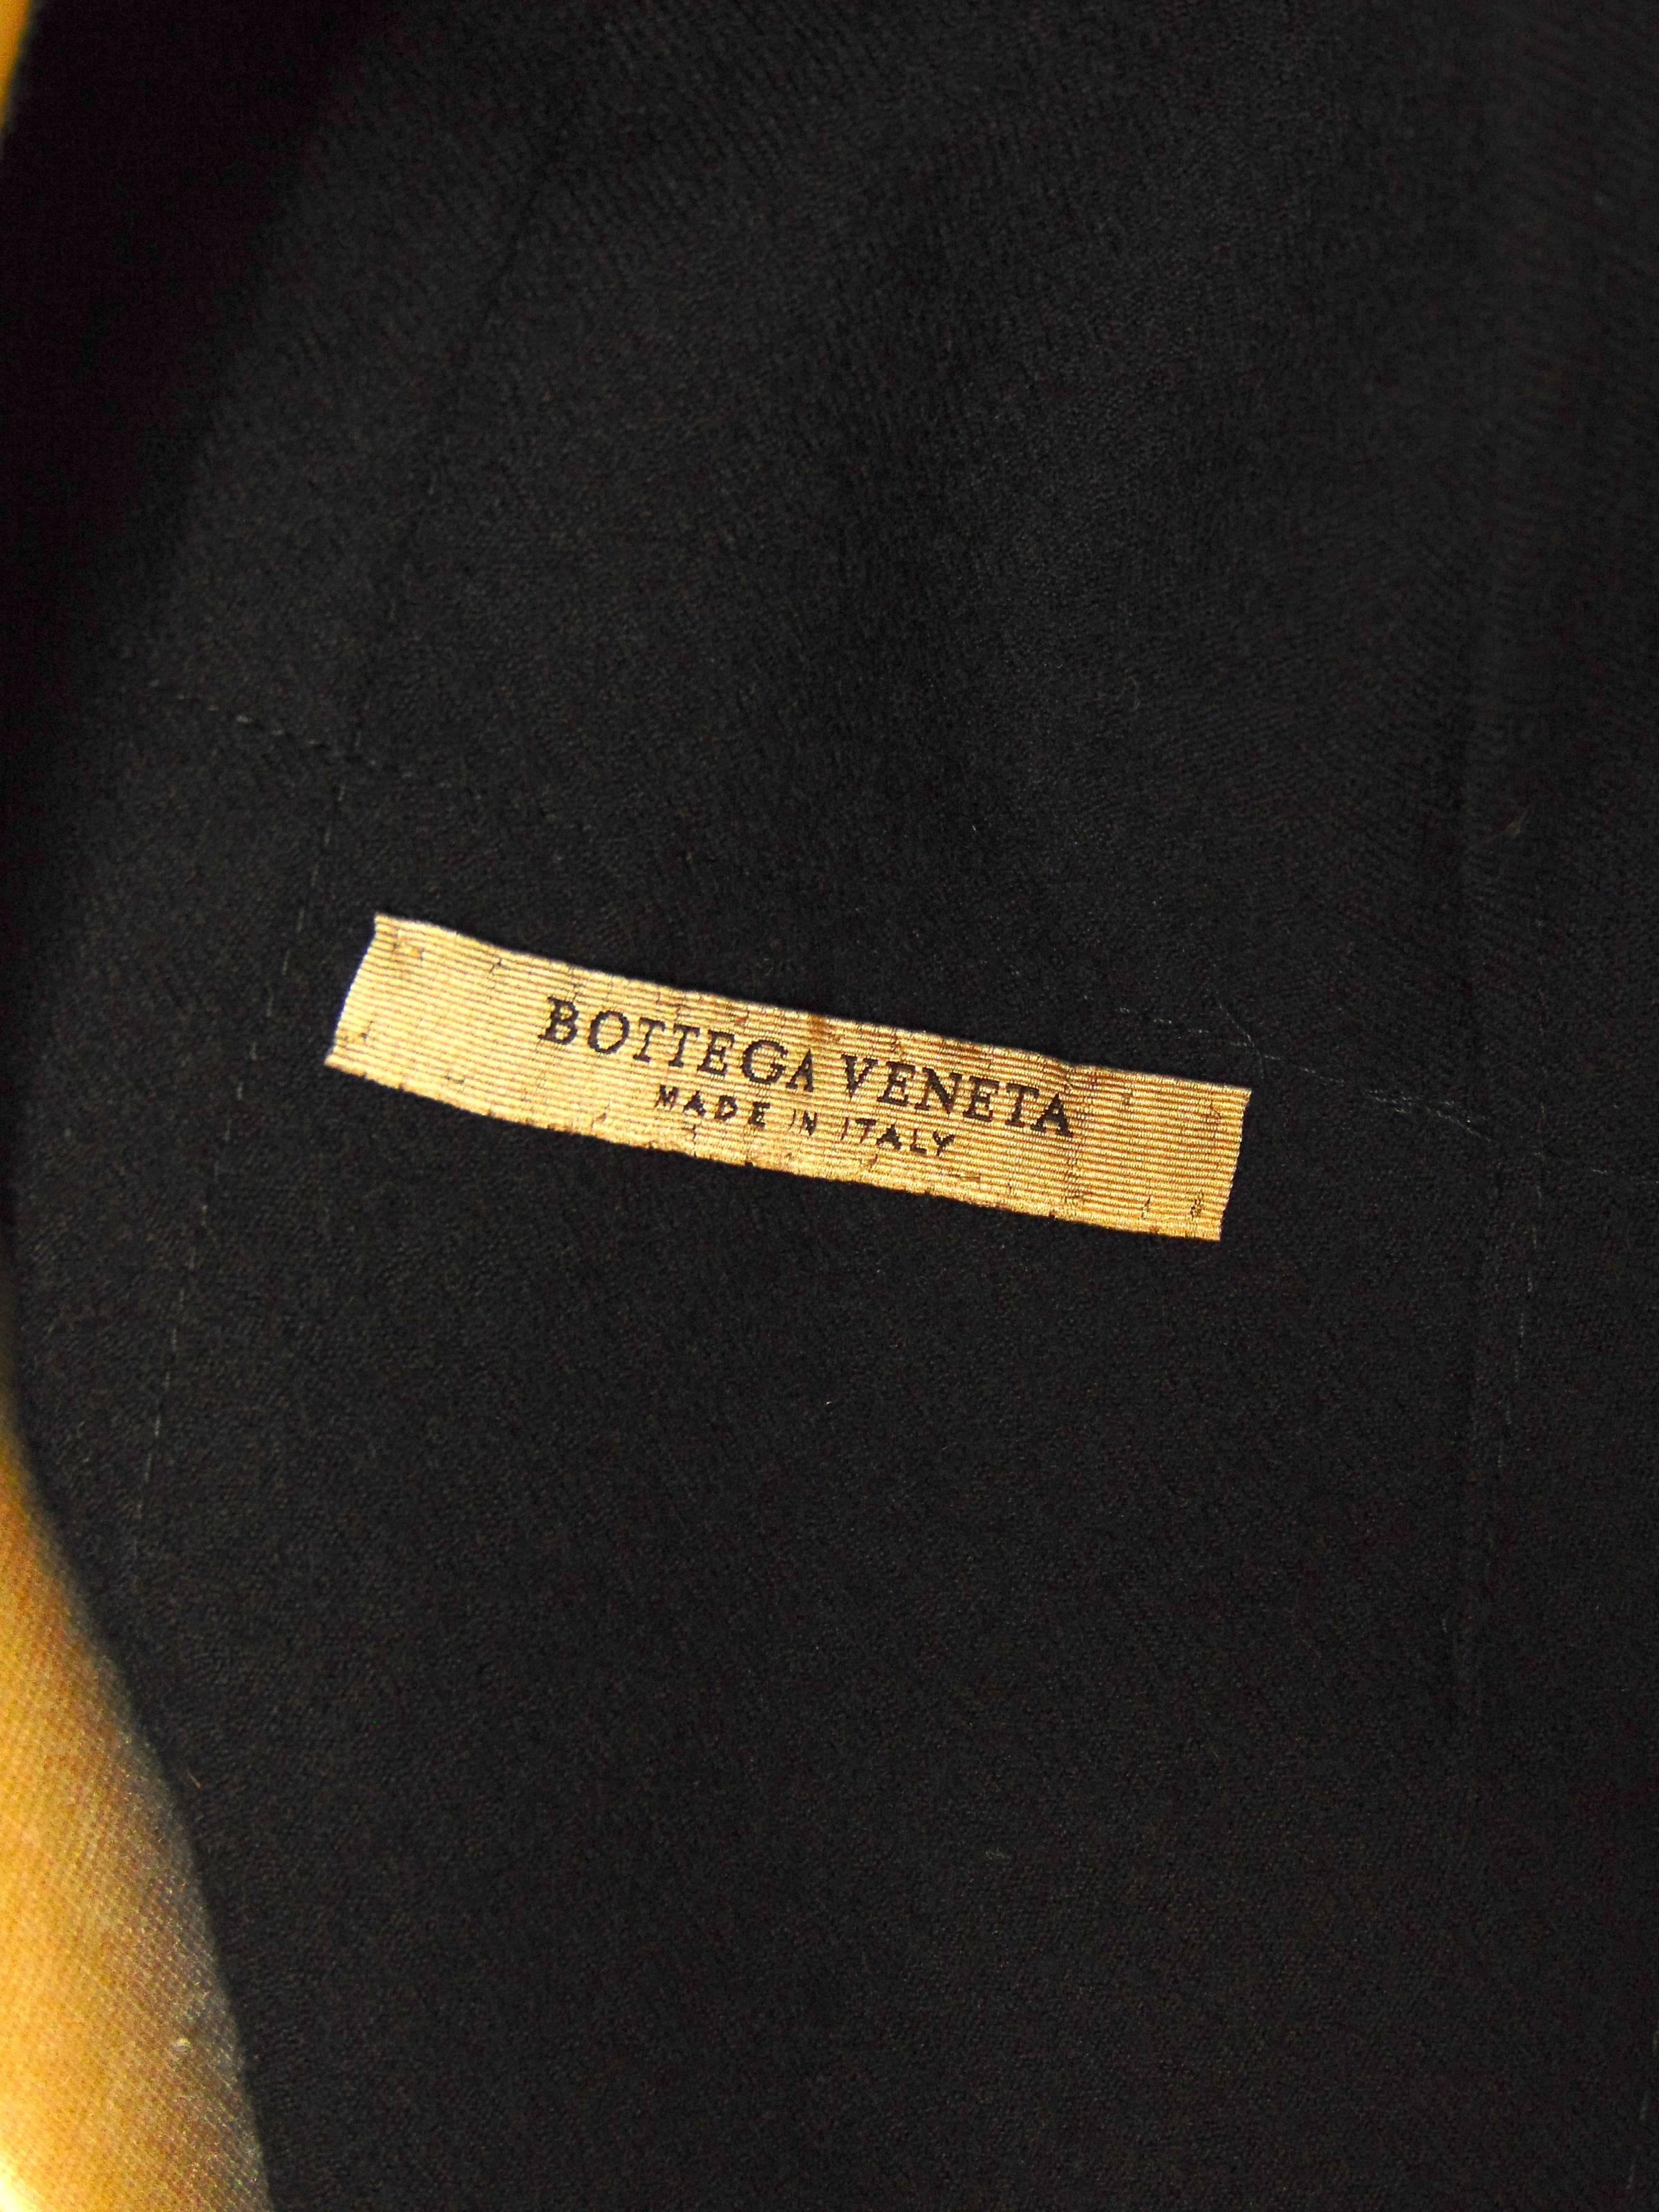 Bottega Veneta Black Wool Jacket Blazer Size 42 Italy 2